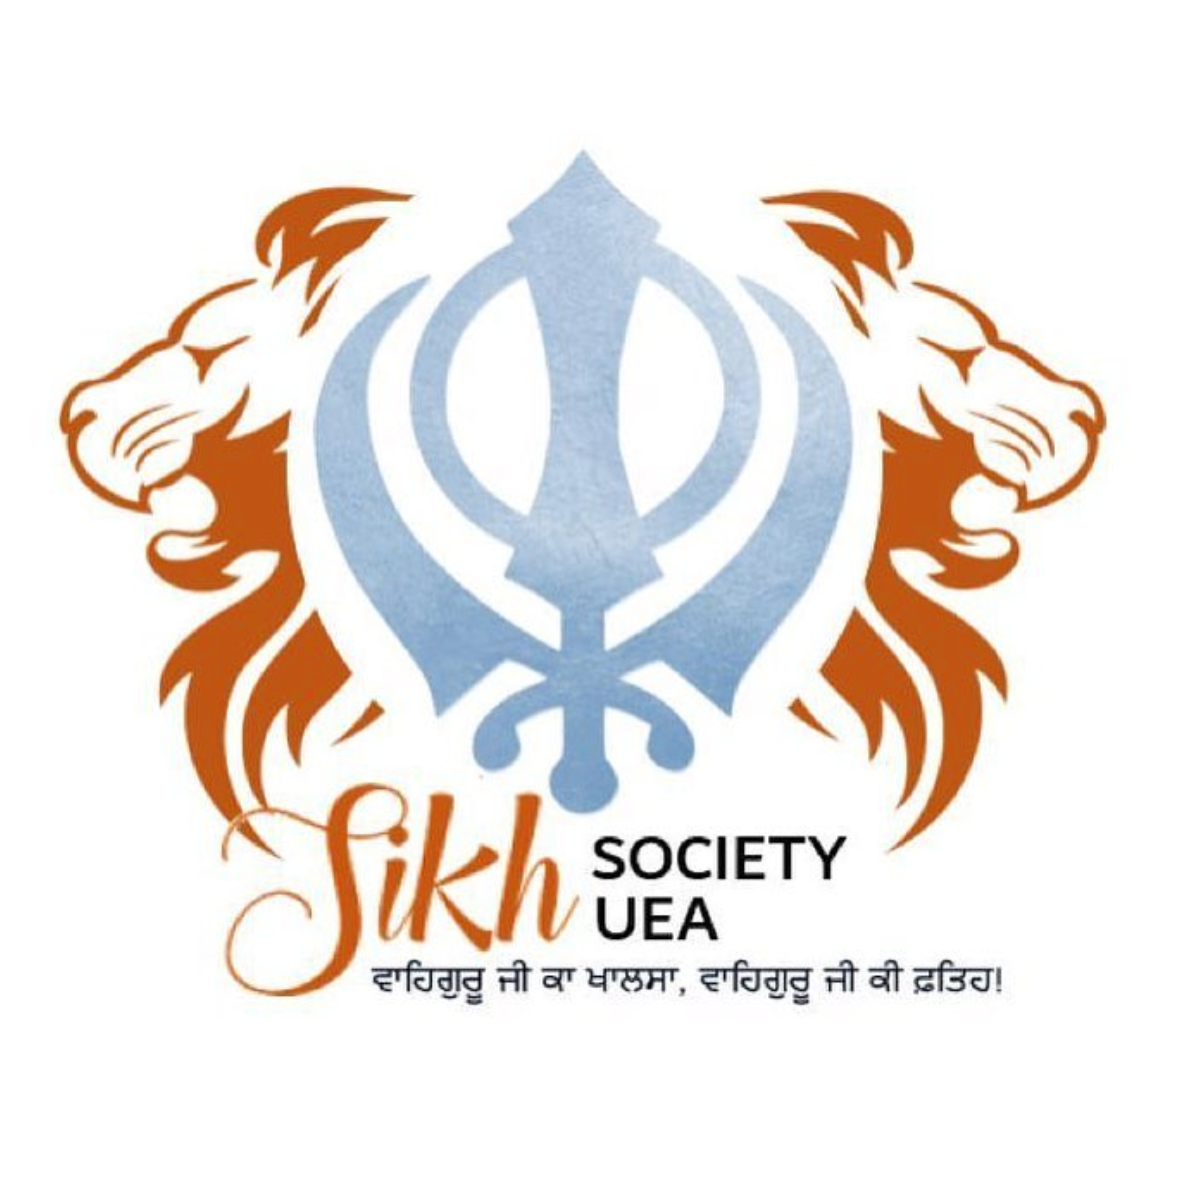 University of East Anglia (UEA) Sikh Society (Copy)